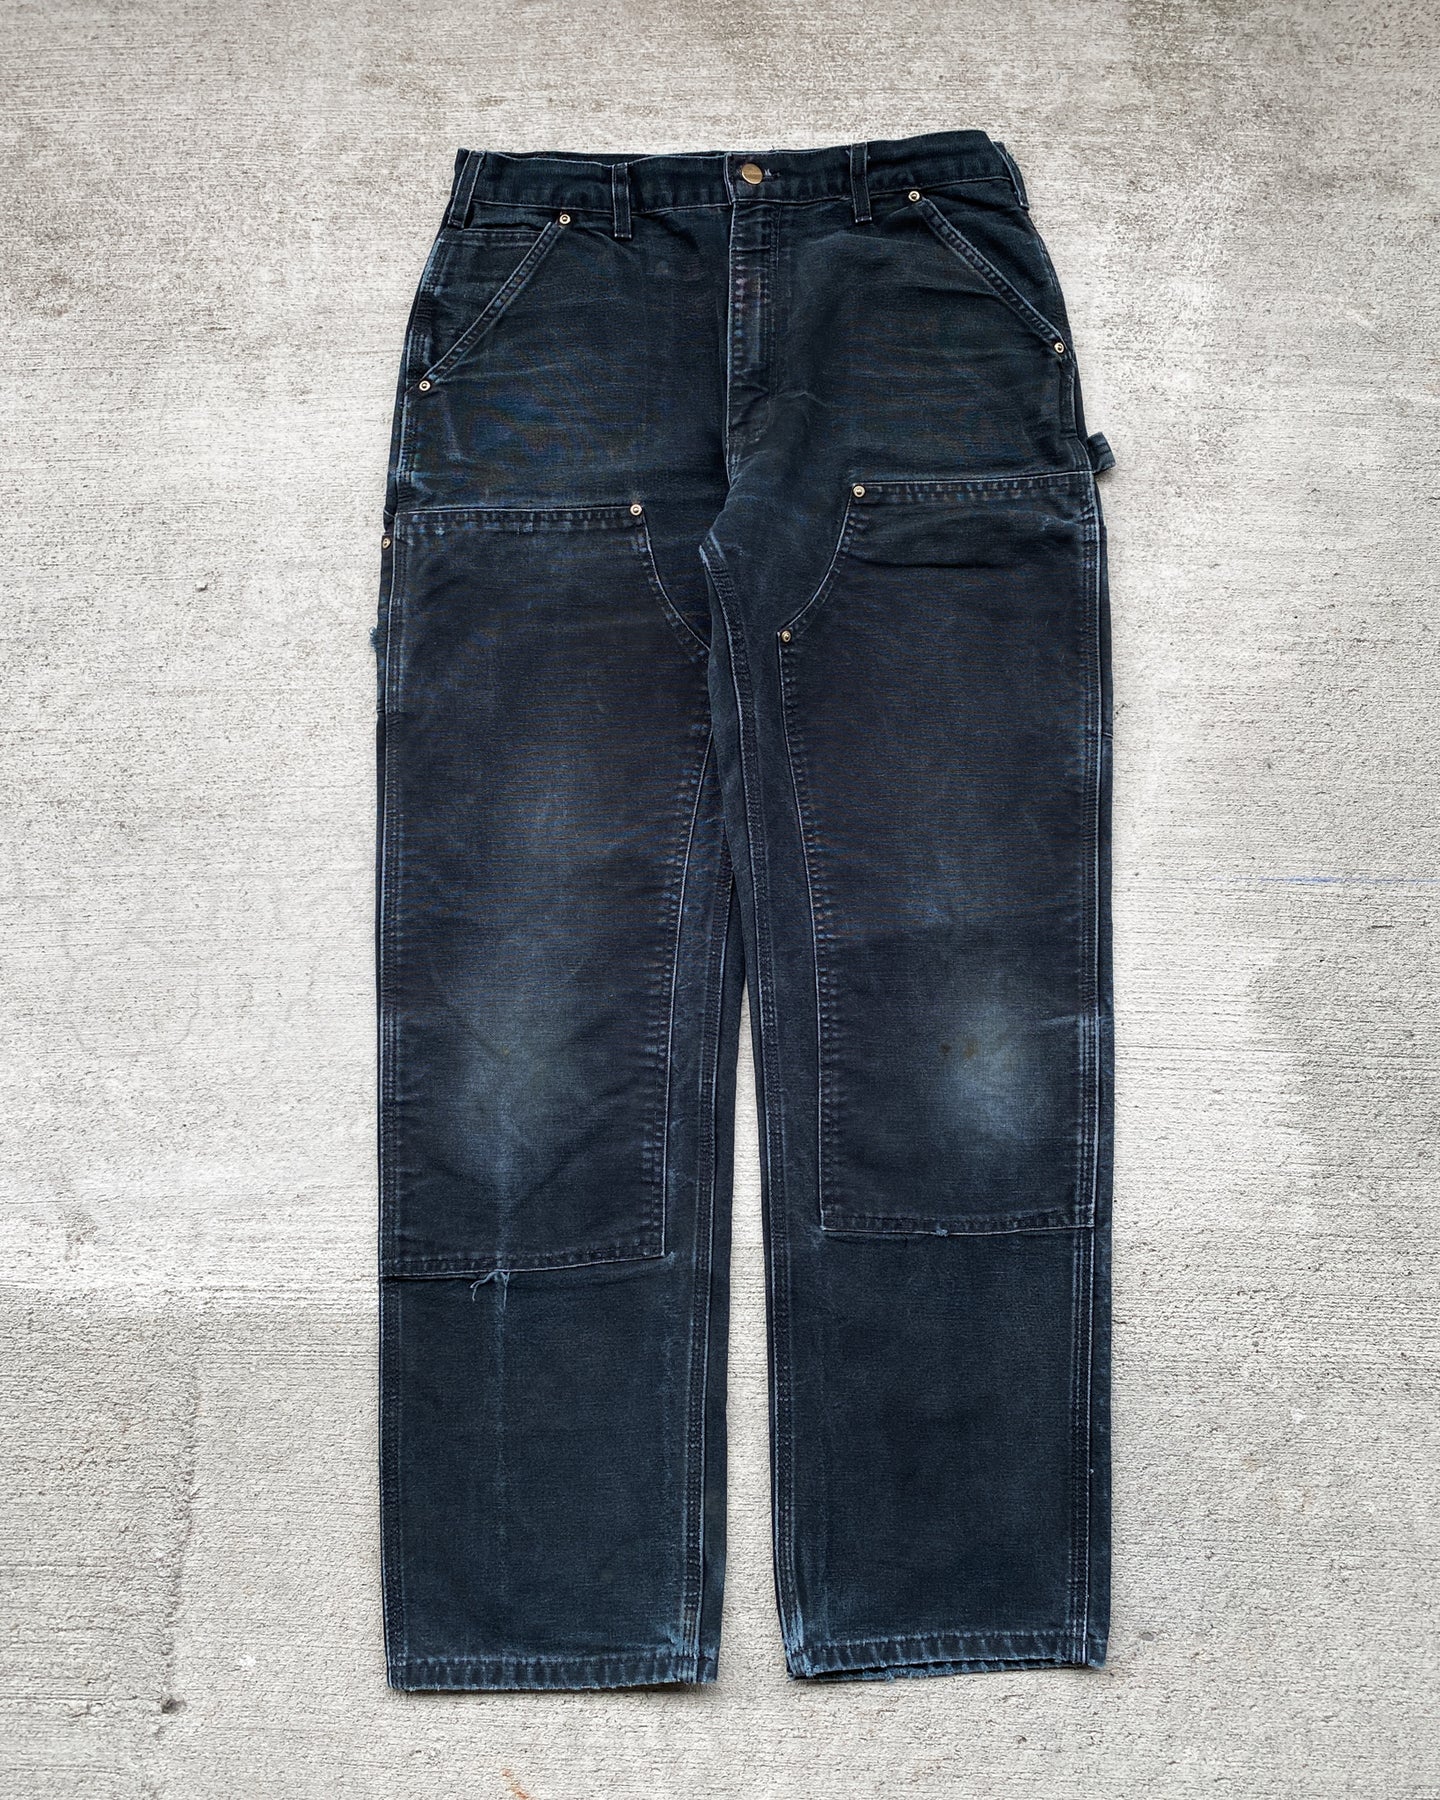 1990s Carhartt Faded Black Double Knee Work Pants - Size 34 x 33